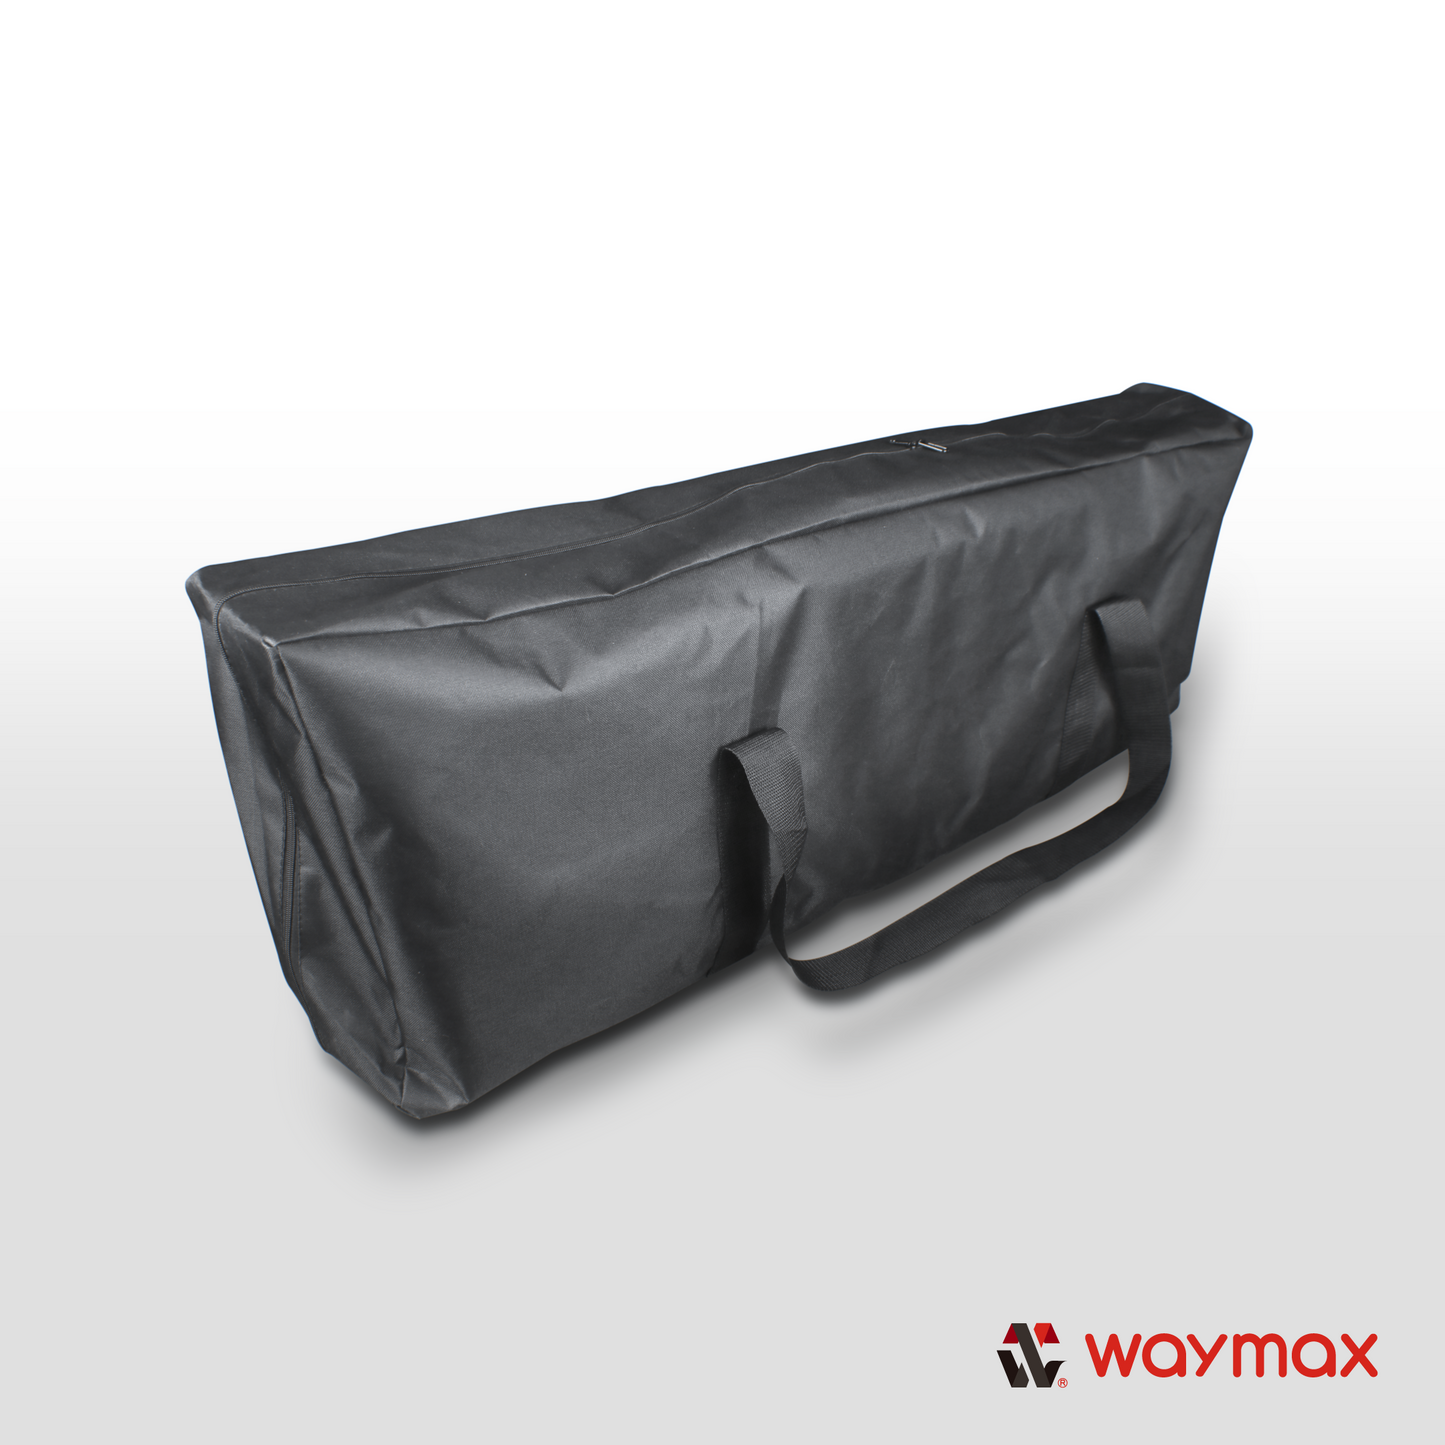 Waymax｜X7、X7pro 電動滑板車專用袋